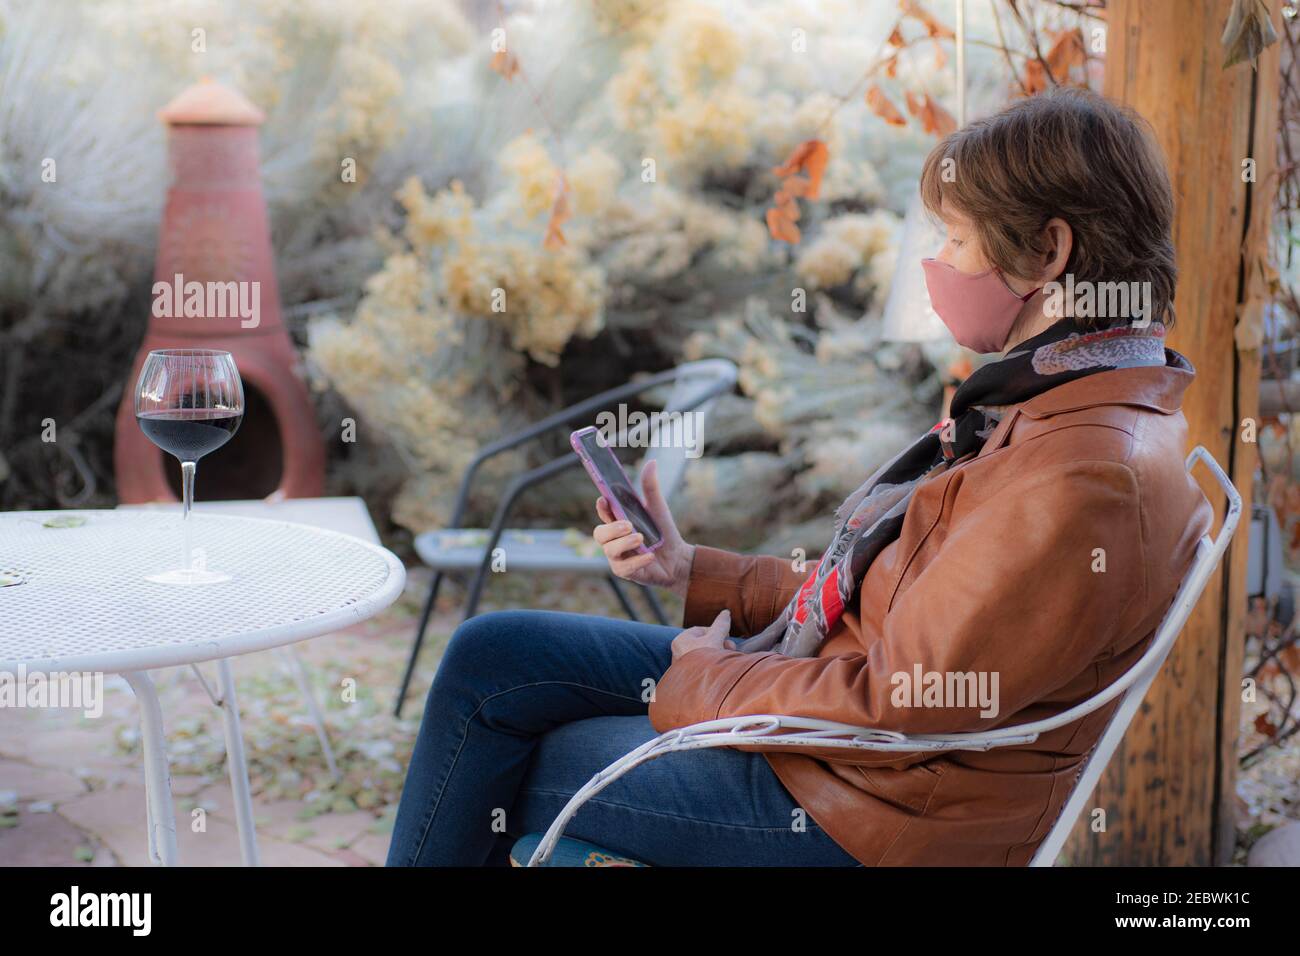 MATURE WOMAN SITTING OUTSIDE WEARING FACE MASK, SANTA FE, NM, USA Stock Photo